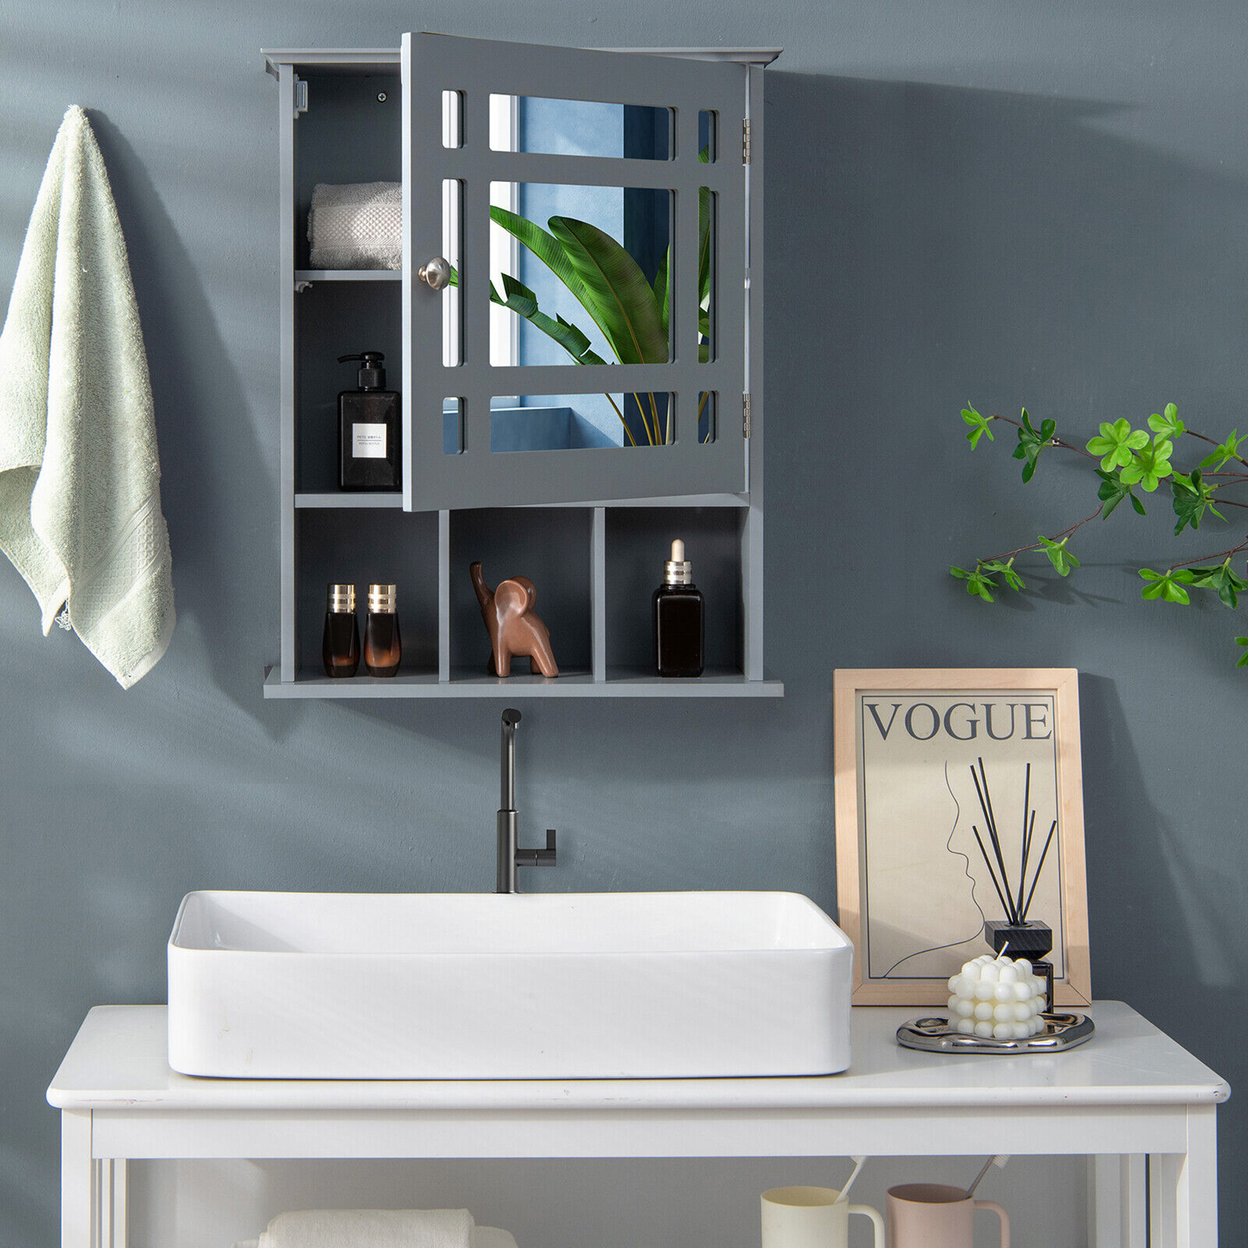 Mirrored Medicine Cabinet Bathroom Wall Mounted Storage W/Adjustable Shelf - White